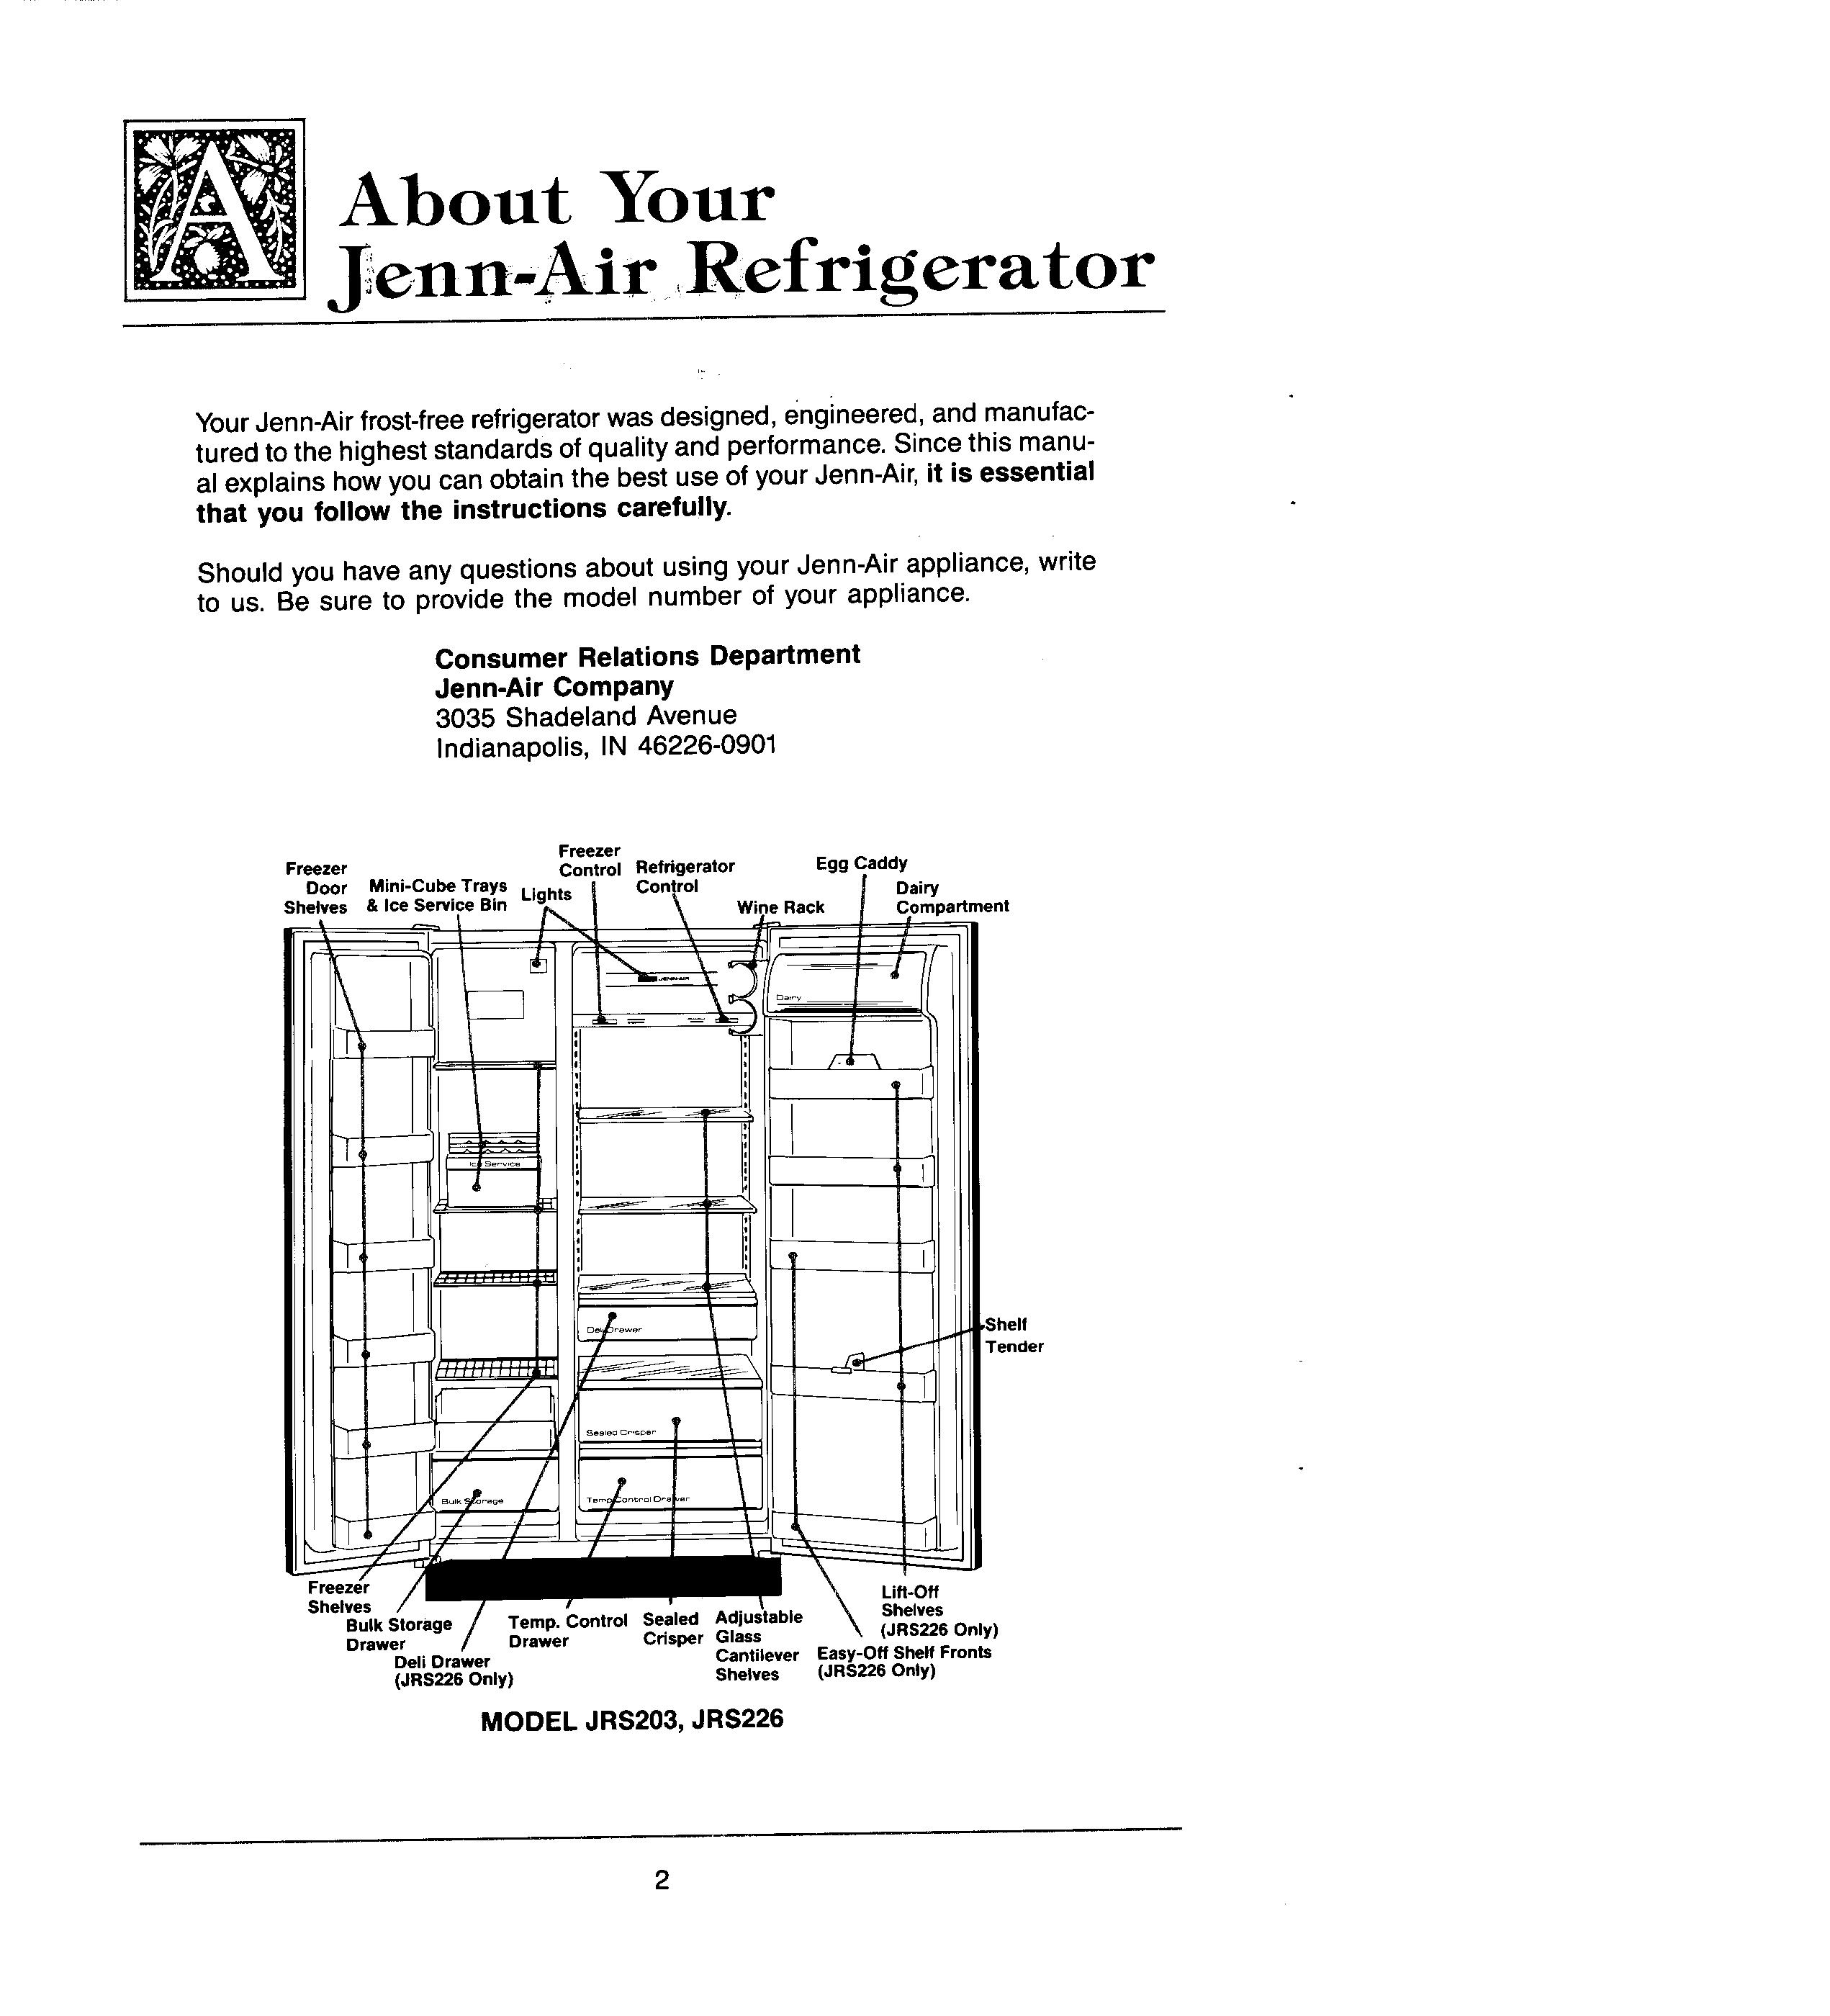 Jenn-Air JRS203 Refrigerator User Manual